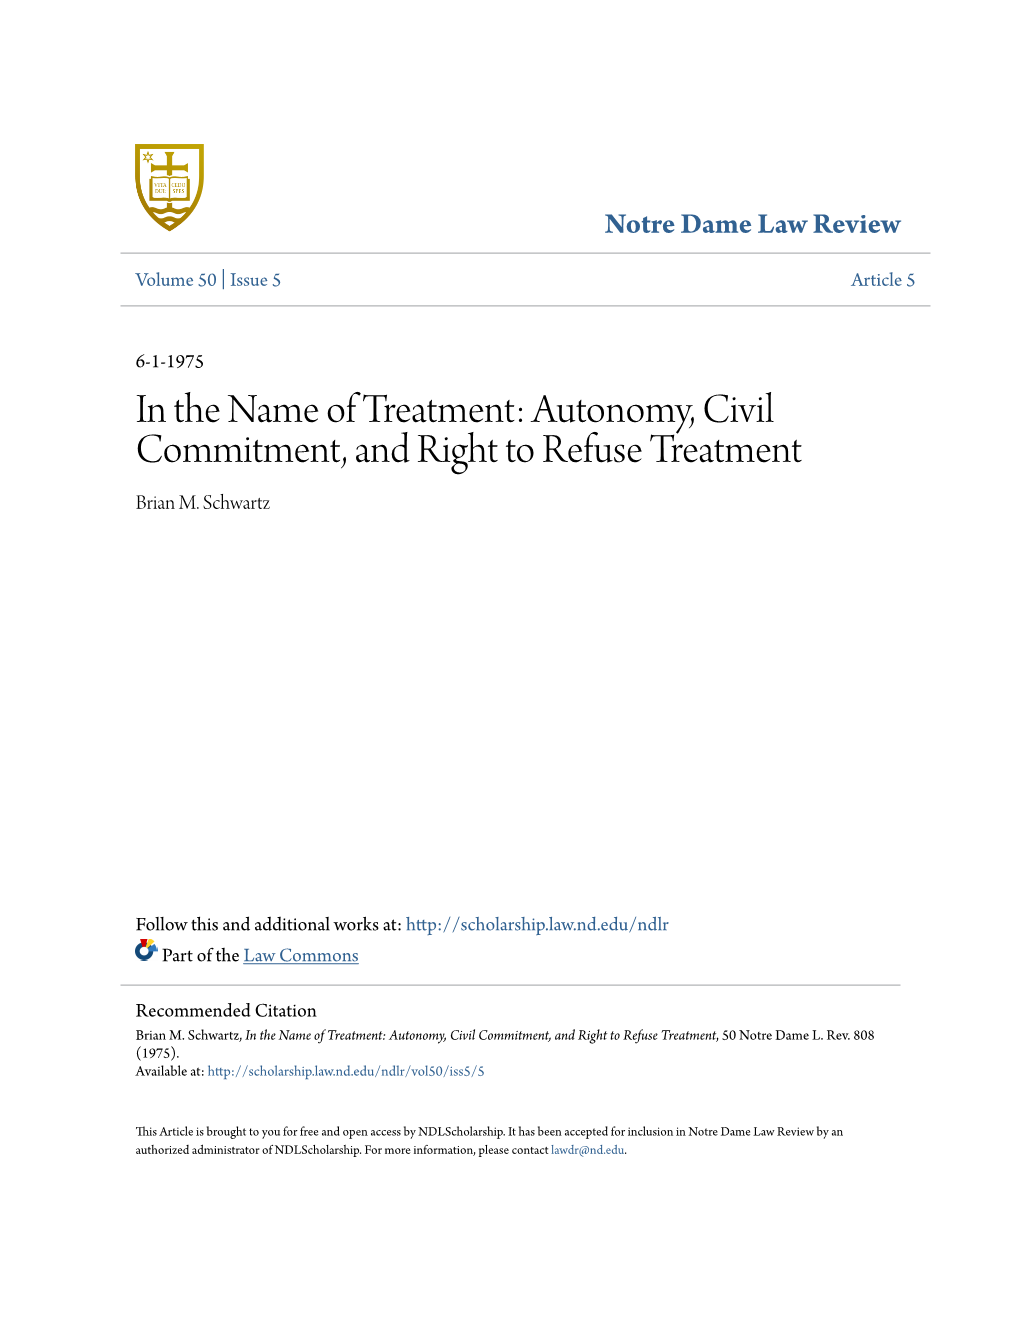 Autonomy, Civil Commitment, and Right to Refuse Treatment Brian M